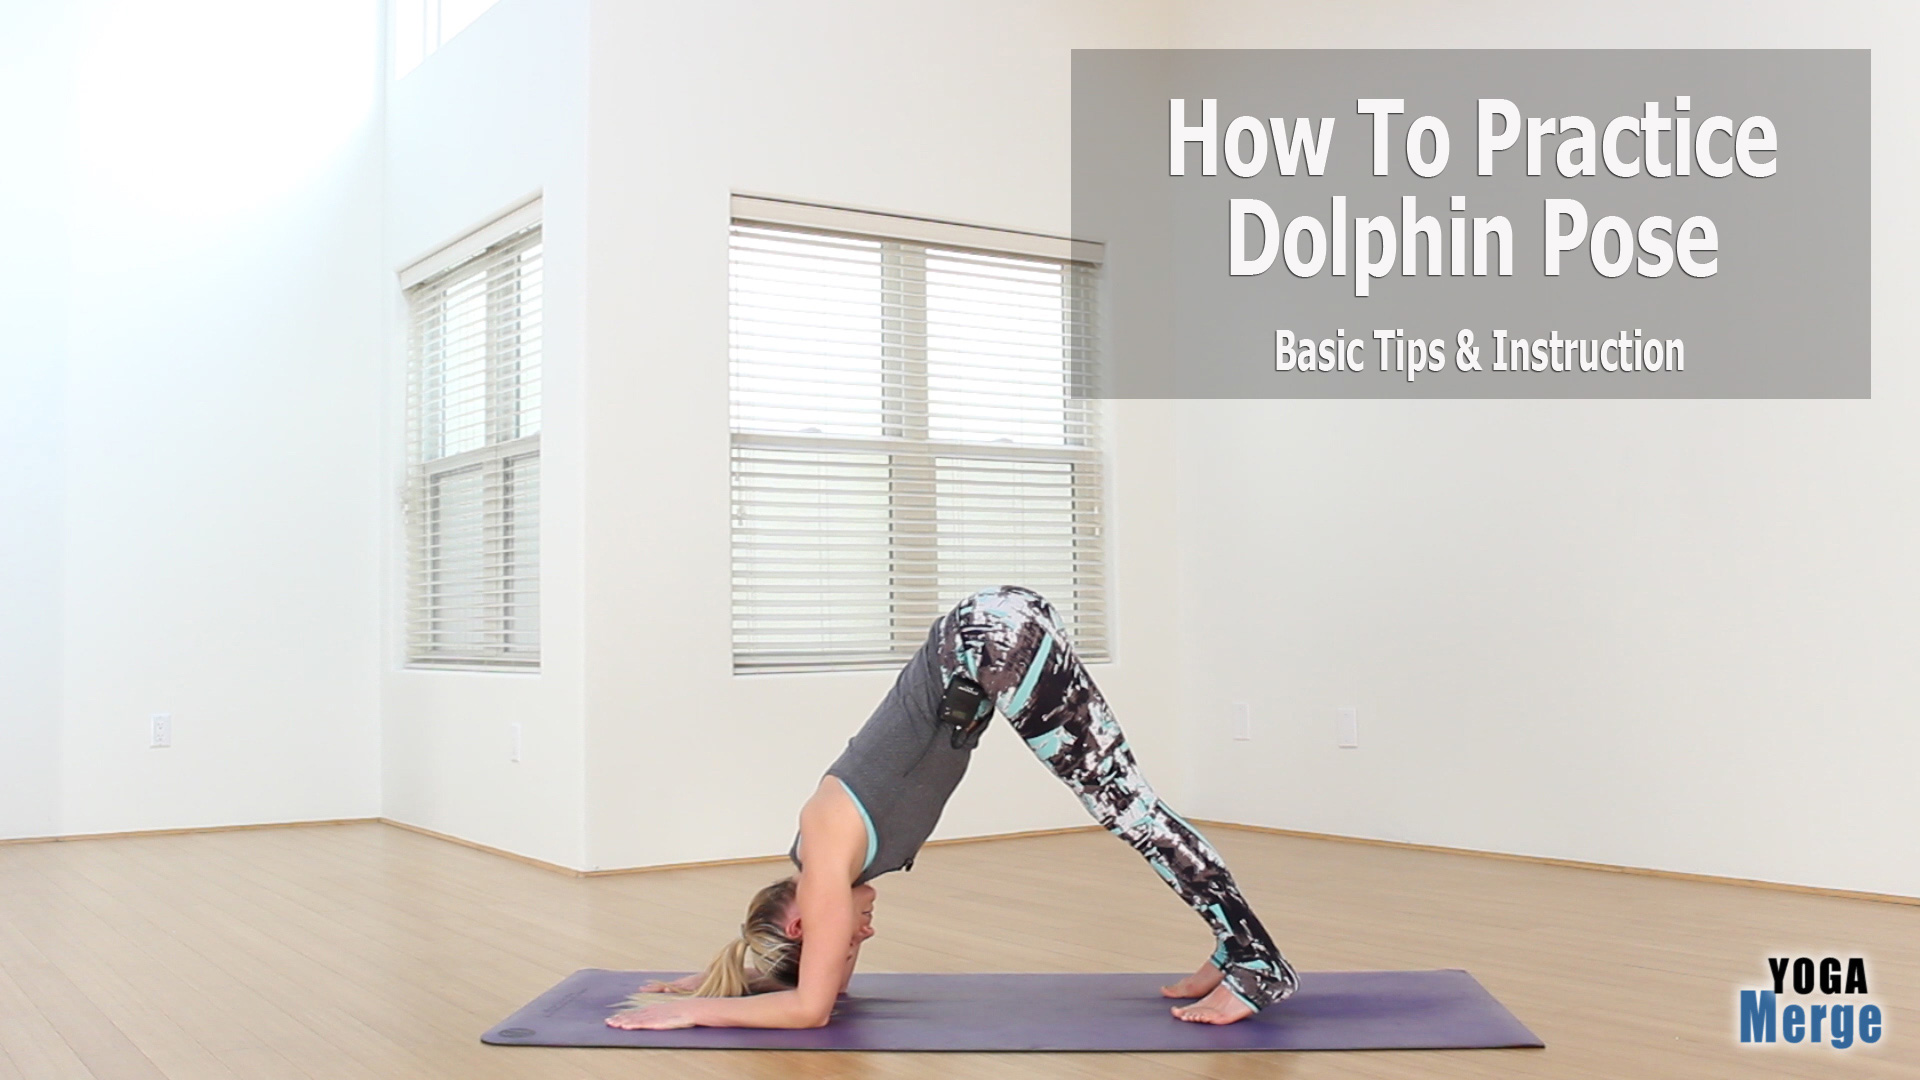 Dolphin Pose | A Yoga Pose To Build Upper Body Strength